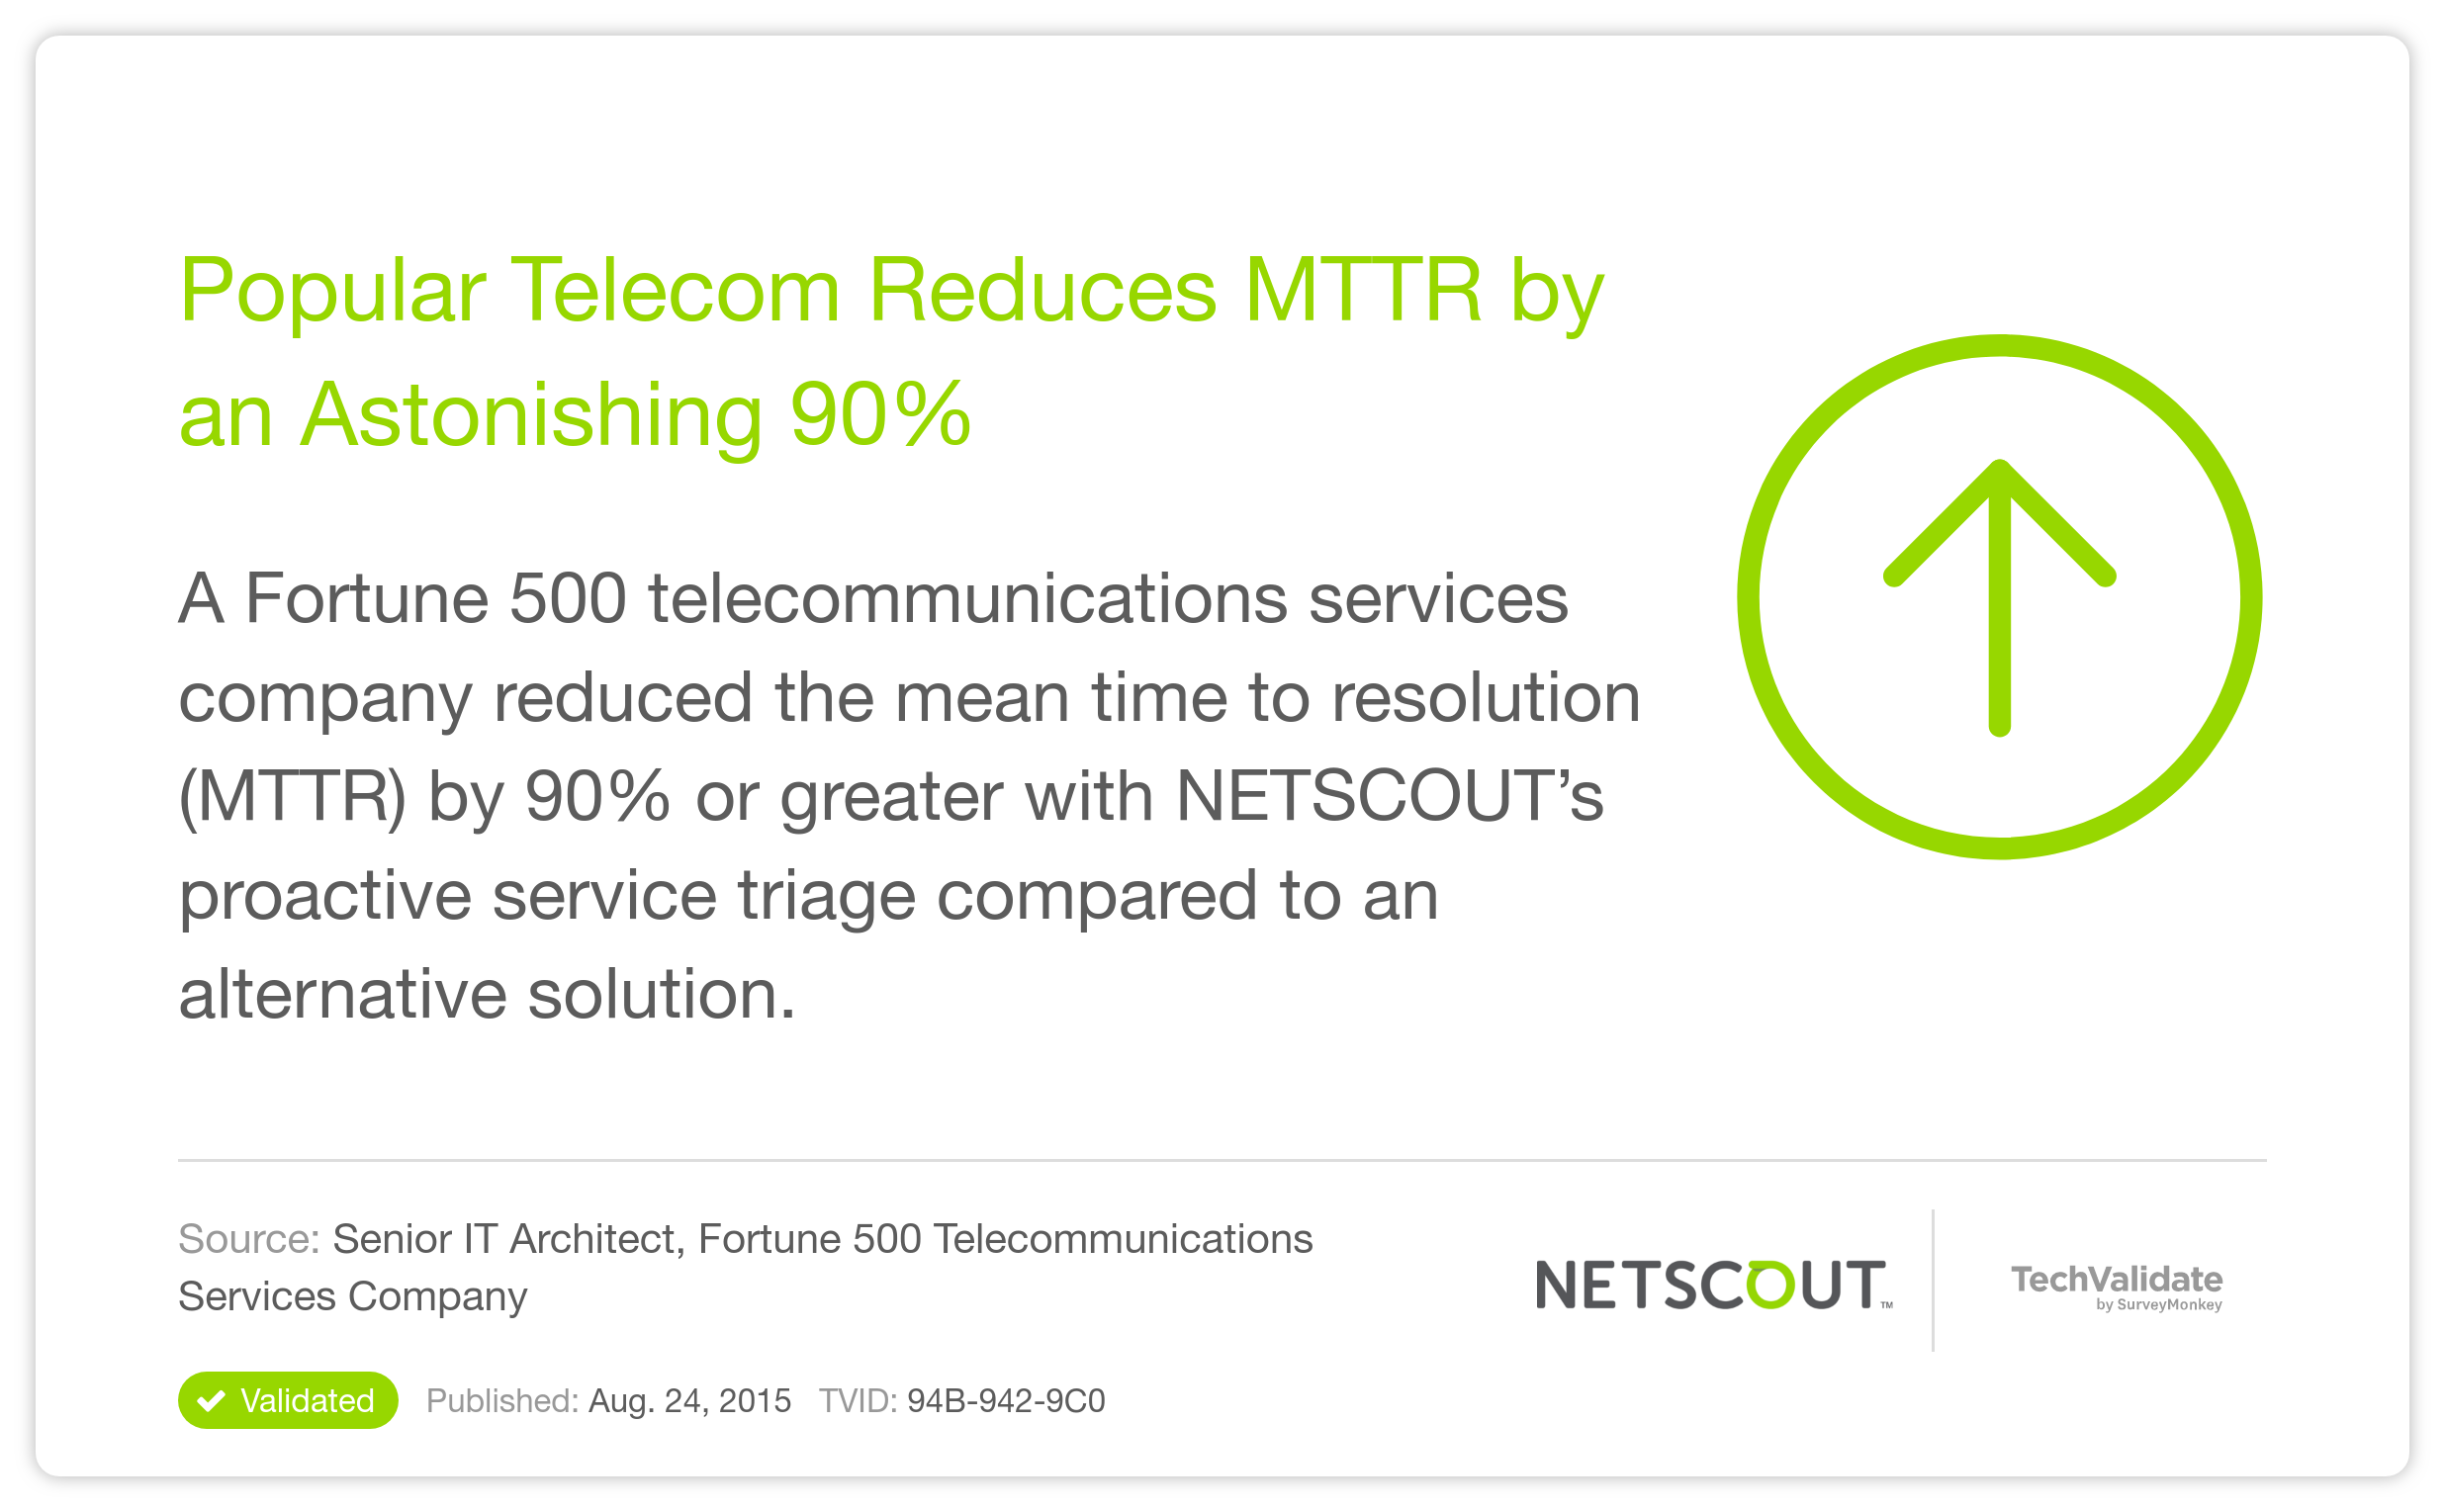 Popular Telecom Reduces MTTR by an Astonishing 90%